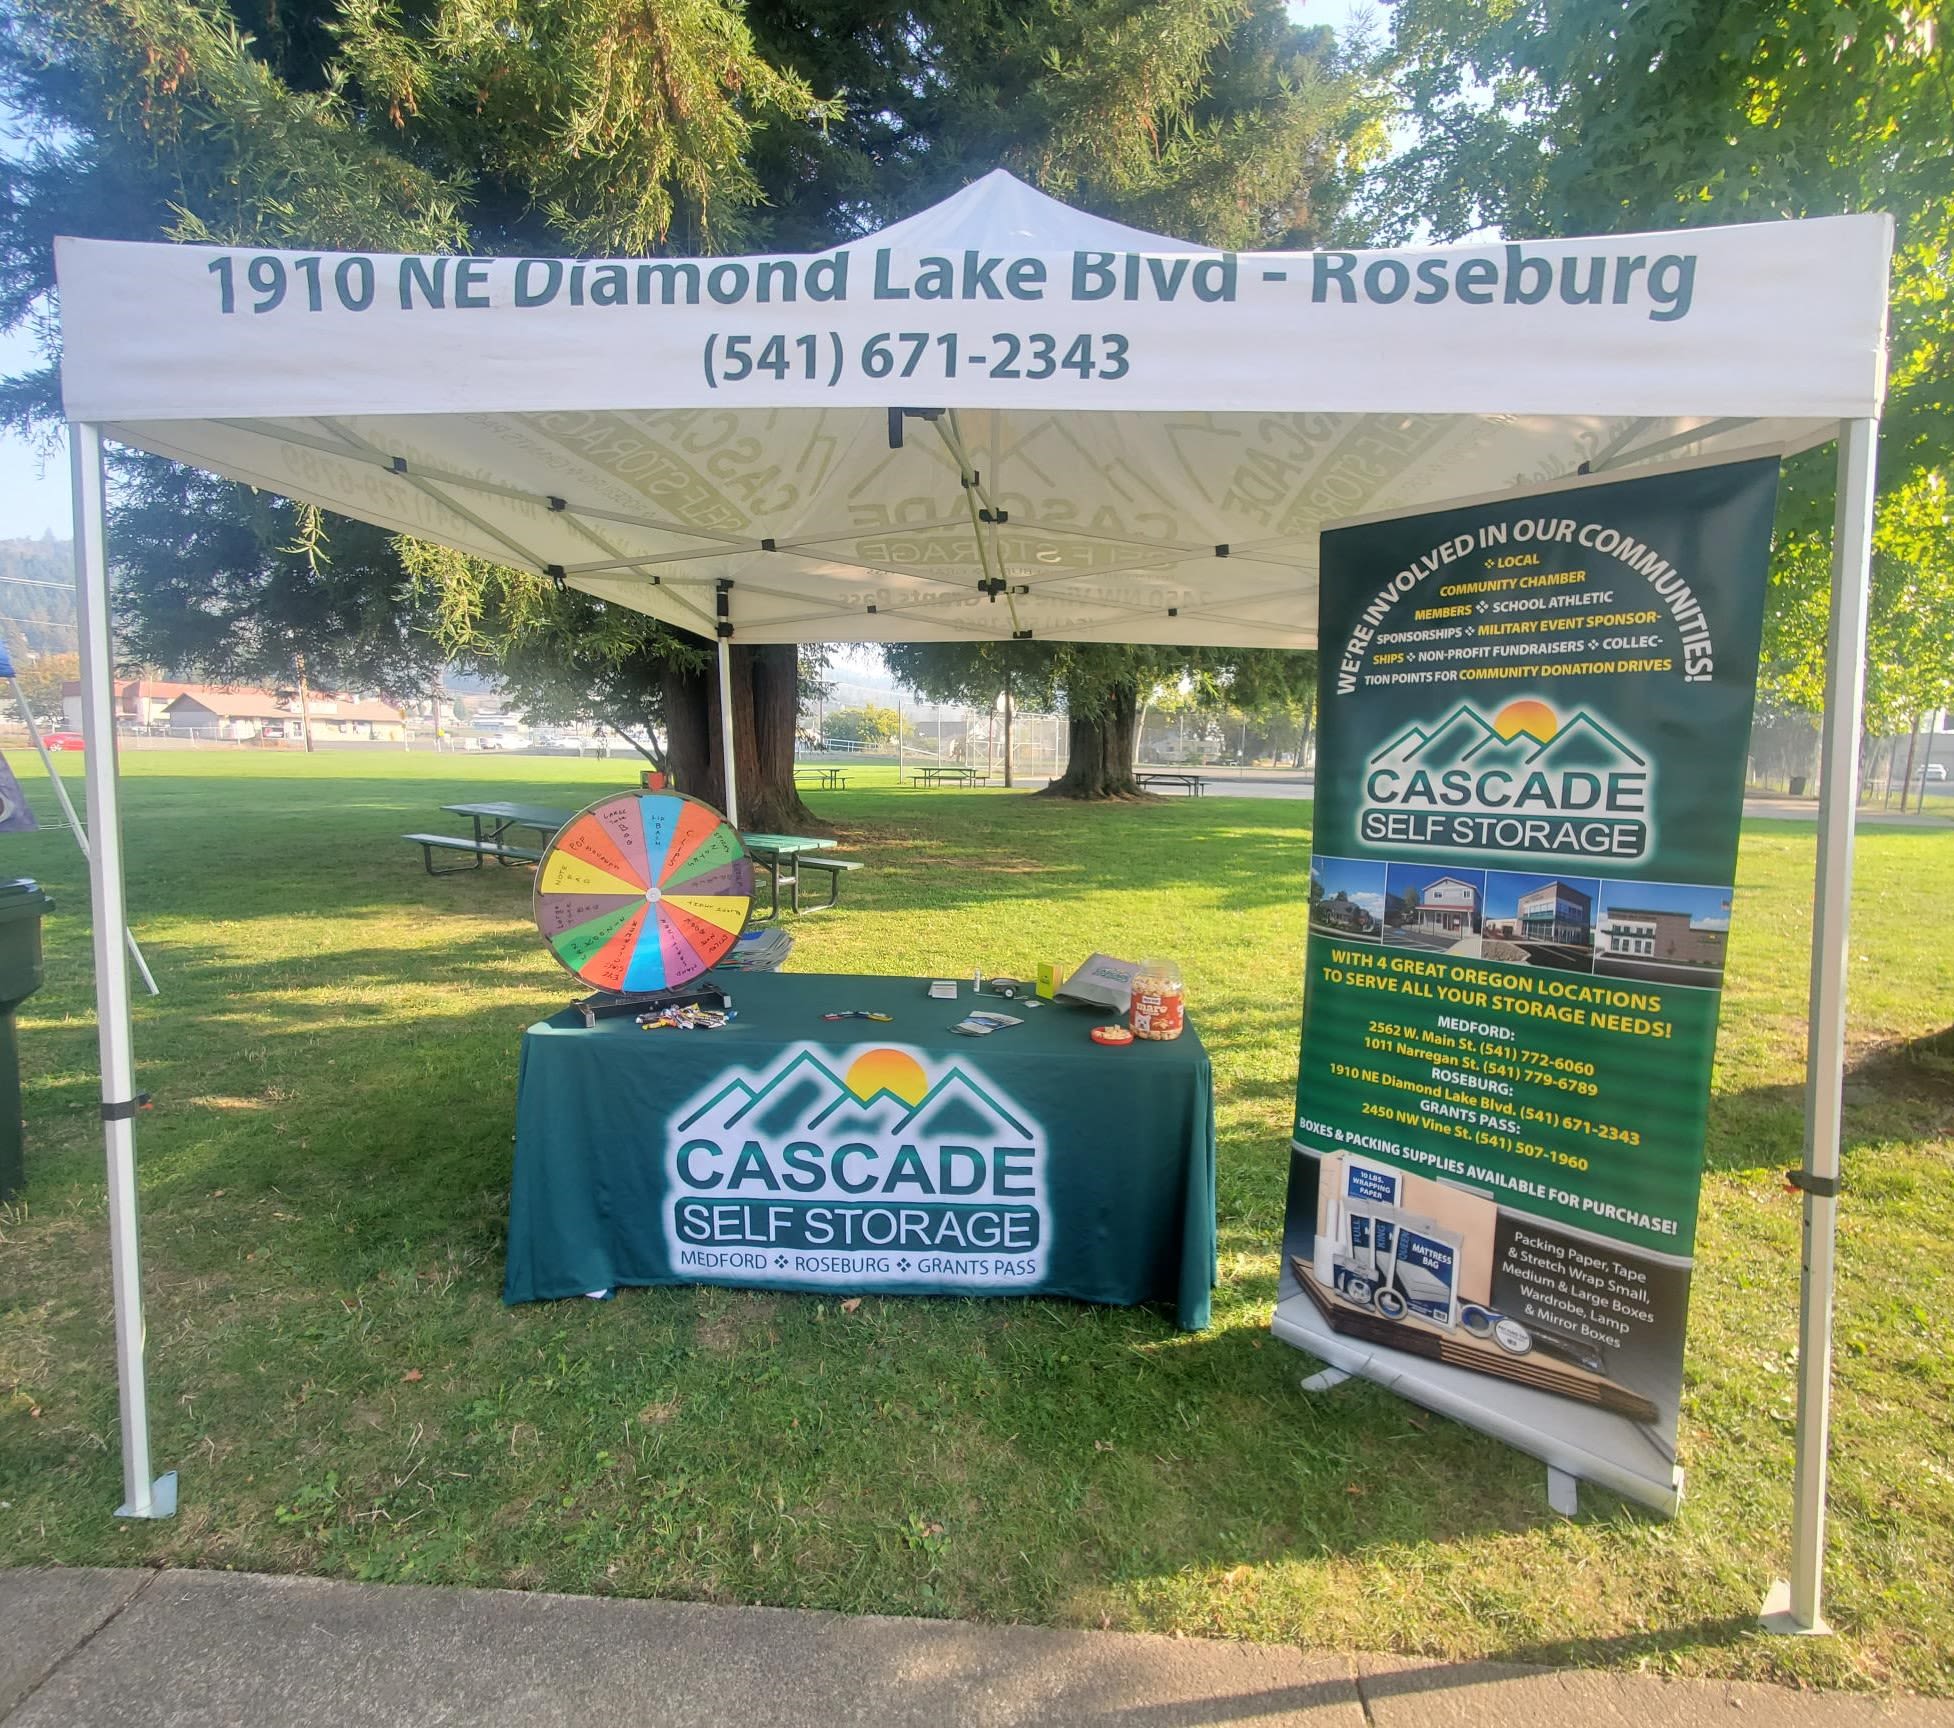 Events & Announcements for Cascade Self Storage in Roseburg, Oregon